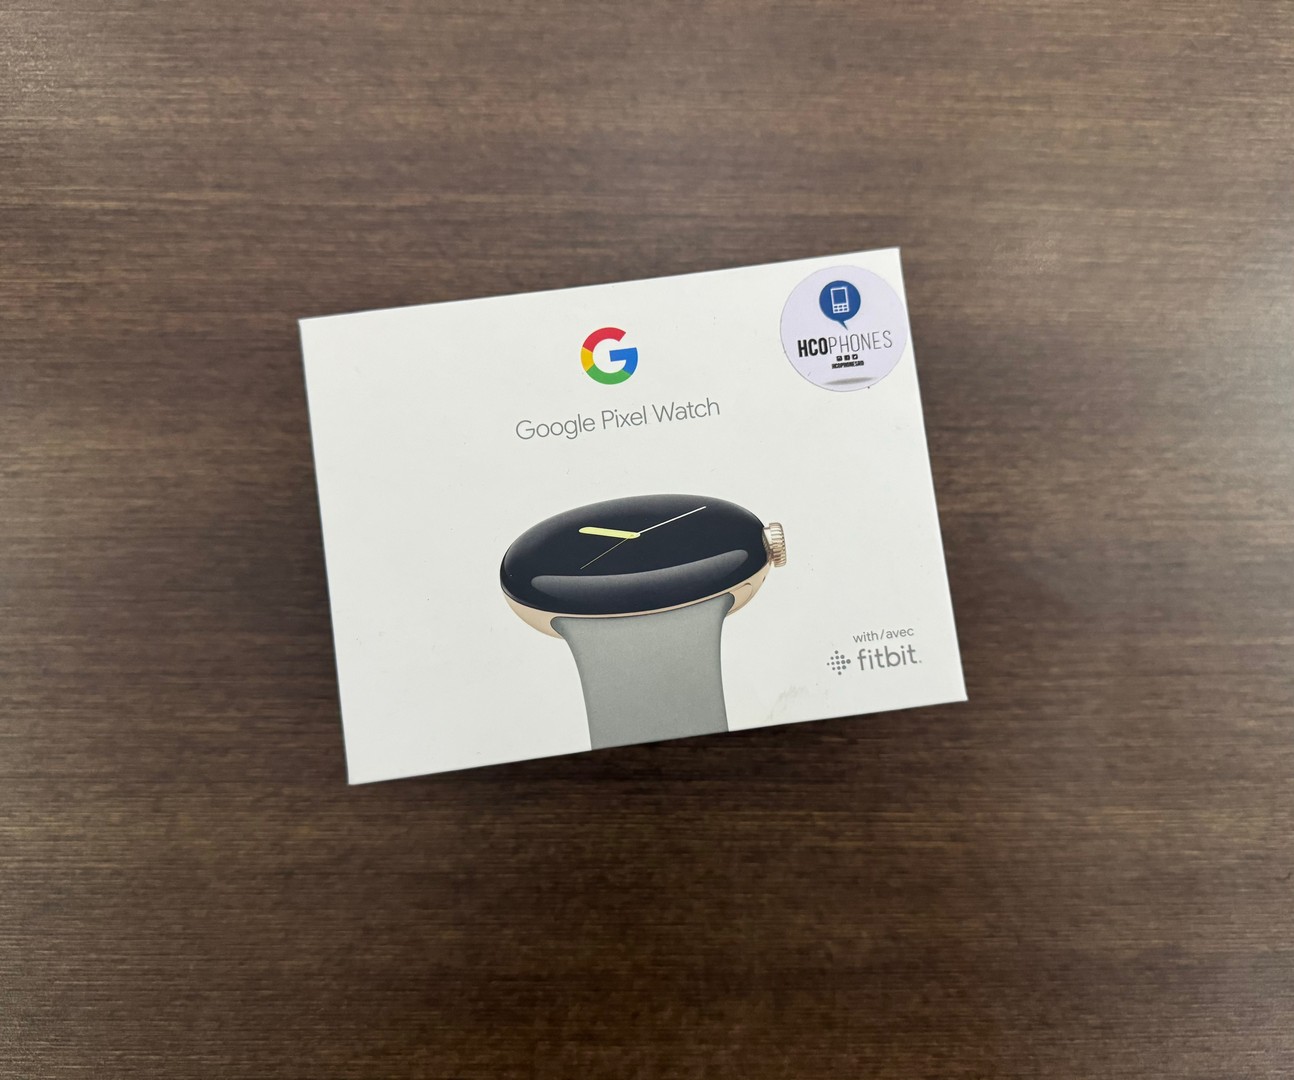 accesorios para electronica - Reloj Google Pixel Watch Nuevo, Garantia, RD$ 10,250 NEG